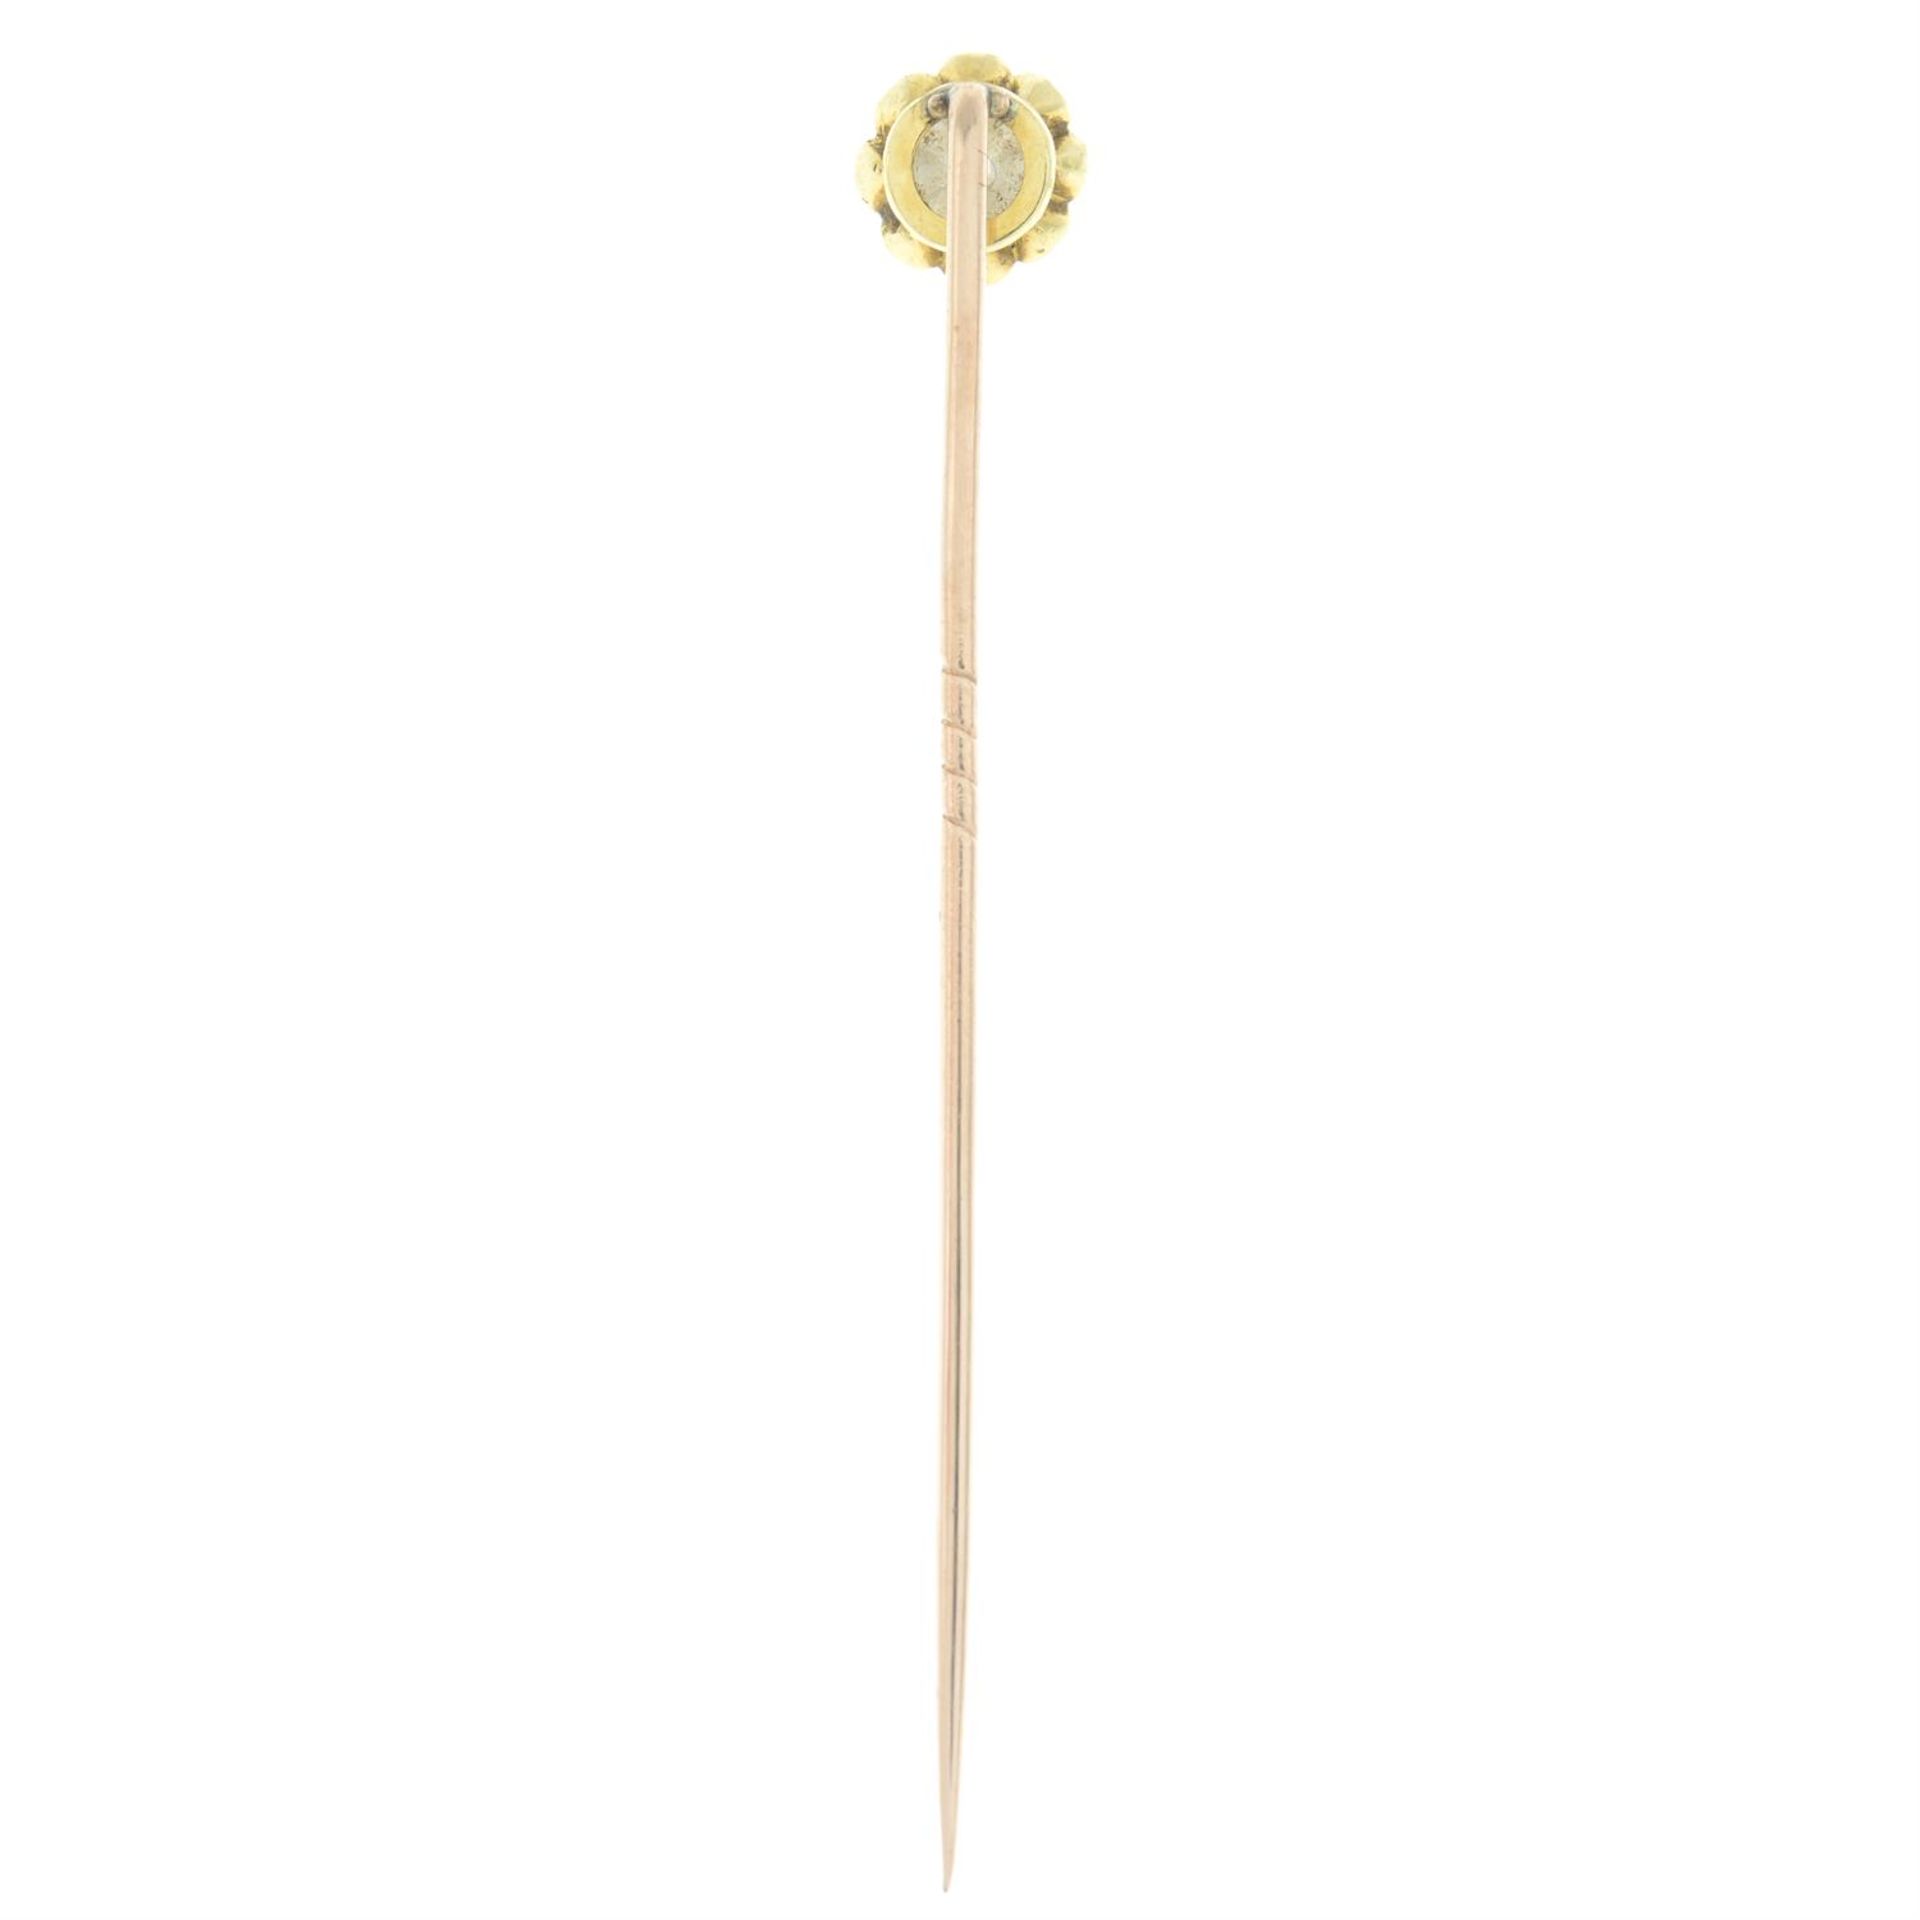 Early 20th century old-cut diamond stick pin - Image 2 of 2